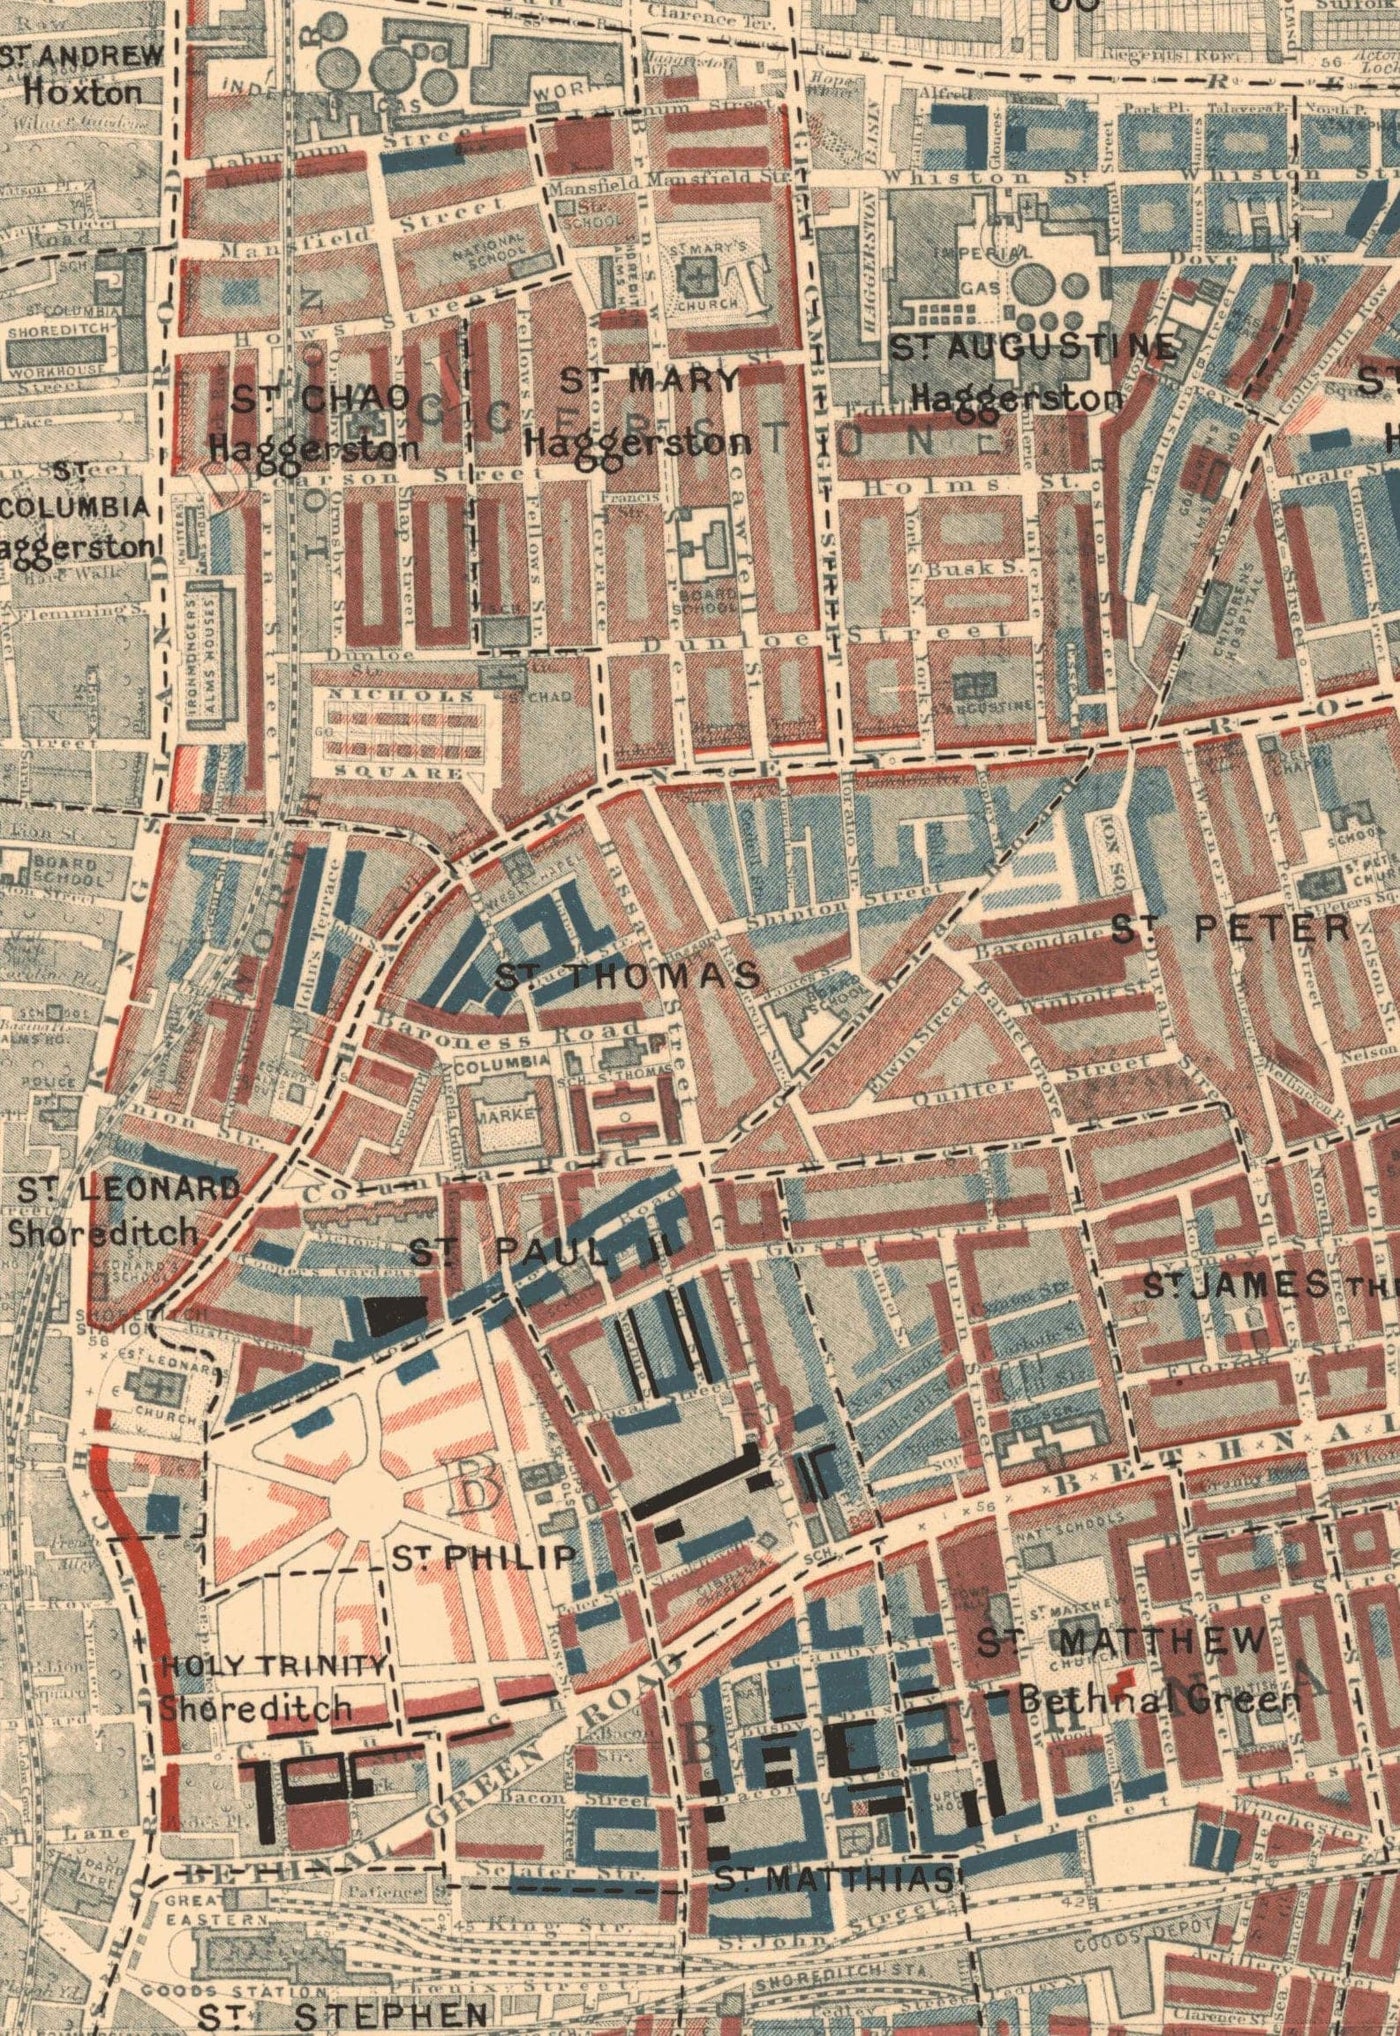 Mapa de la pobreza en Londres 1898-9, Distrito Central del Este, por Charles Booth - Hackney, Shoreditch, Tower Hamlets - E2, E1, E1W, EC2, EC3